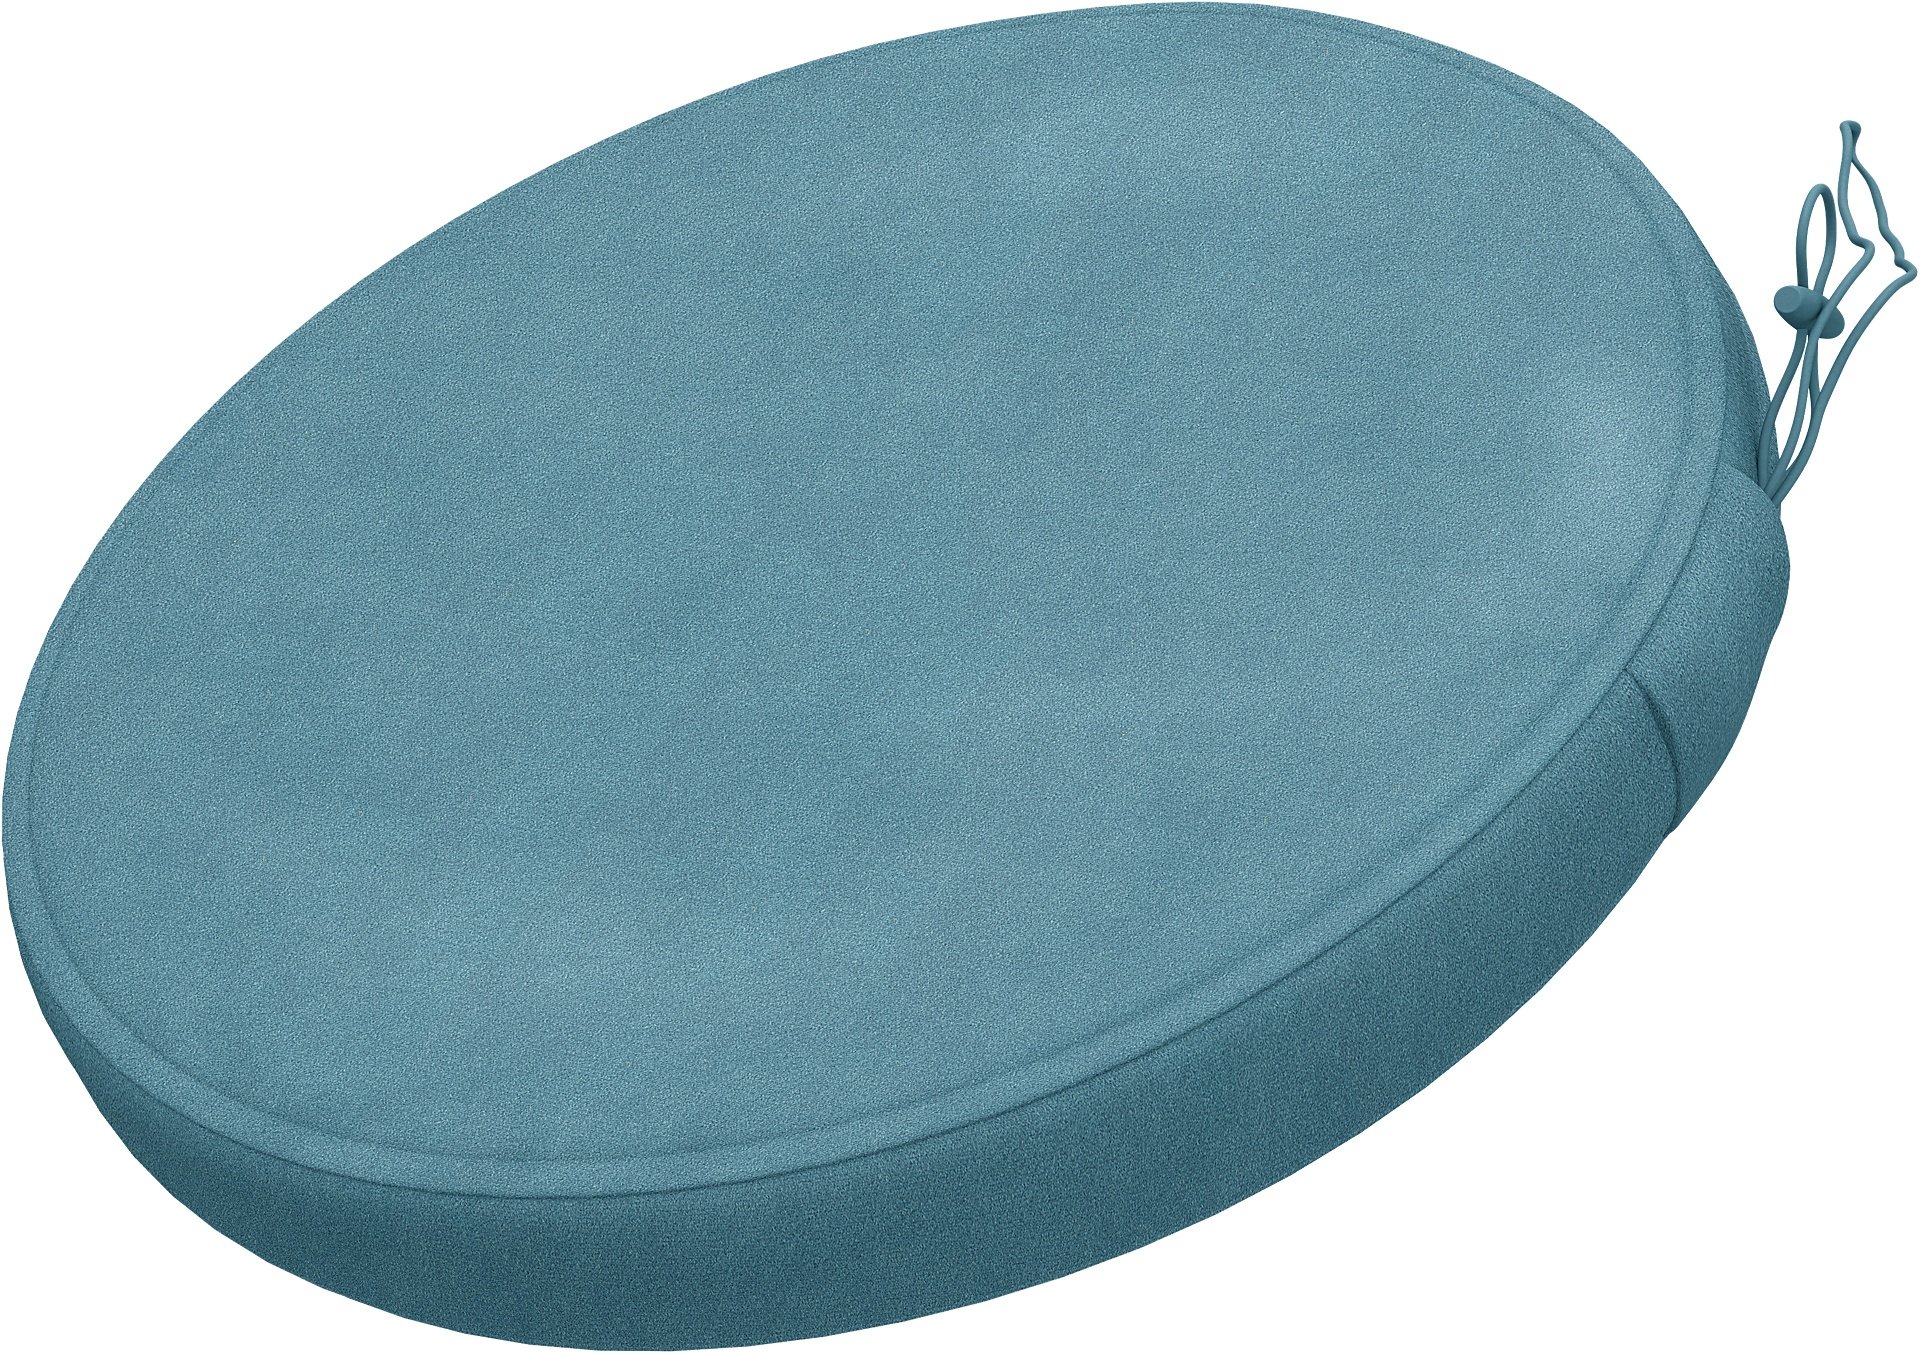 IKEA - Froson/Duvholmen Chair Seat Cushion Round Cover , Dusk Blue, Outdoor - Bemz